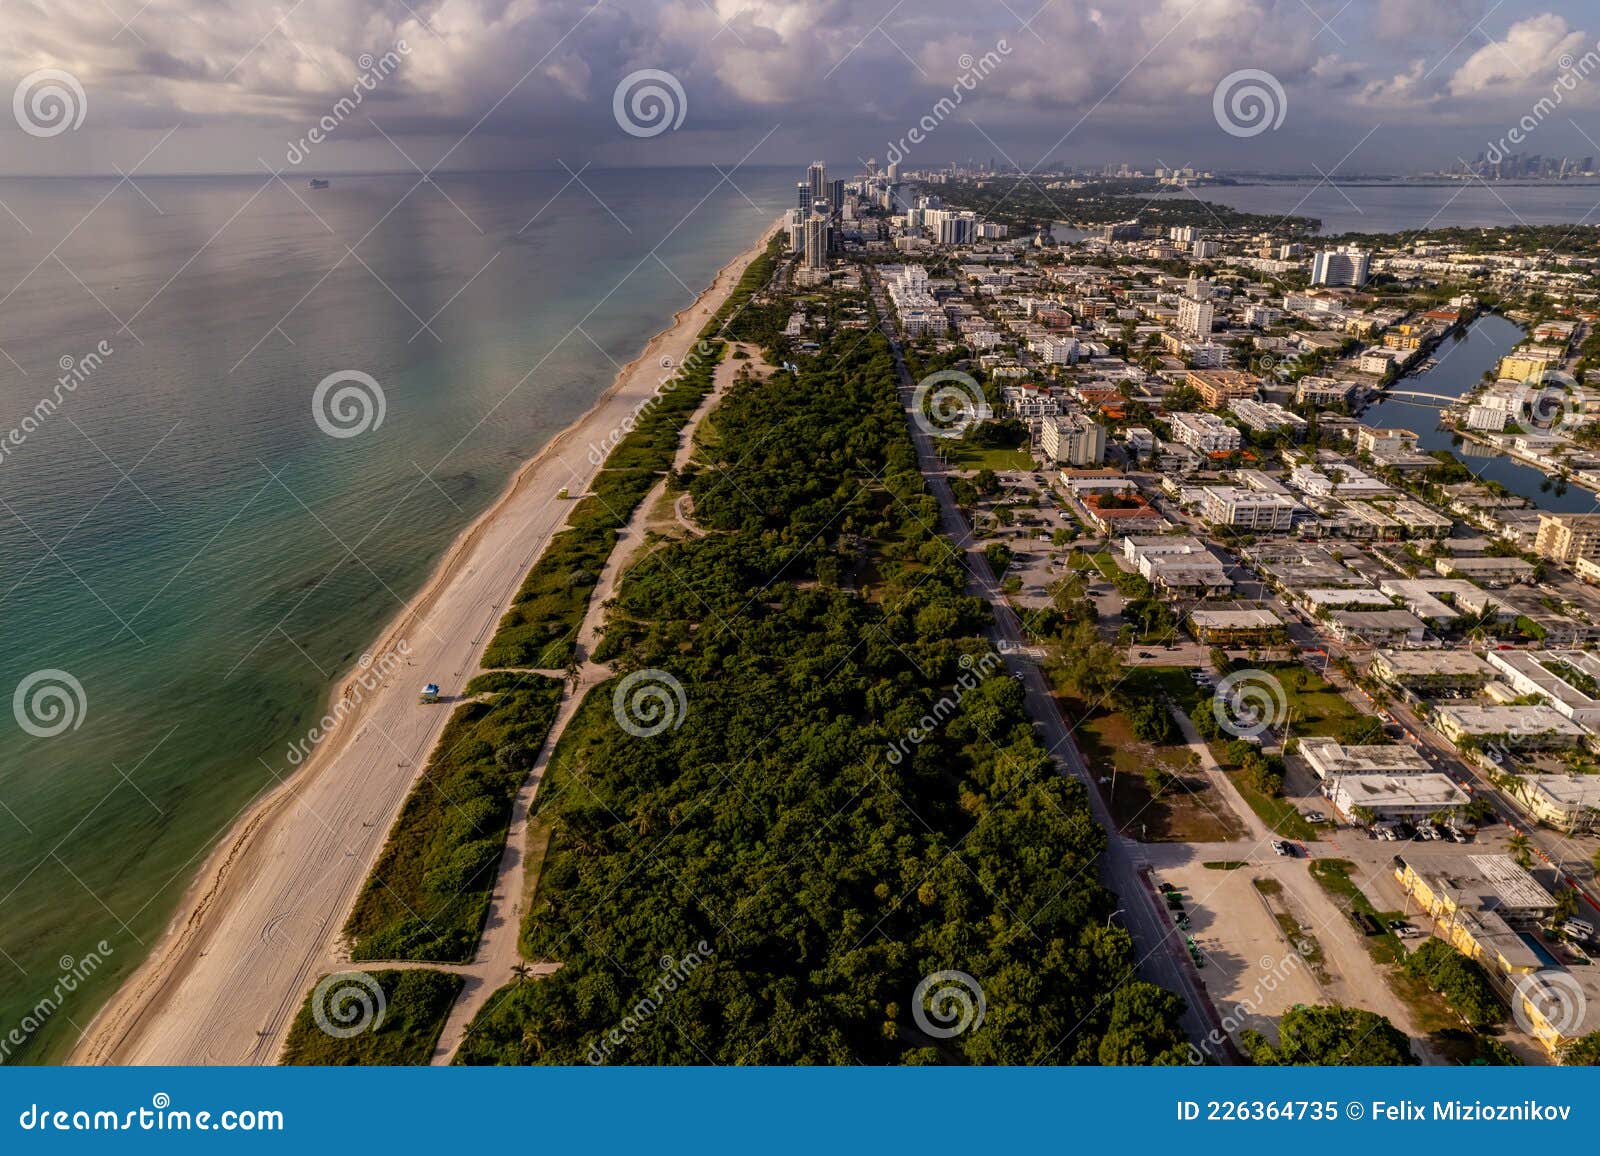 aerial photo of the north beach oceanside park miami fl usa